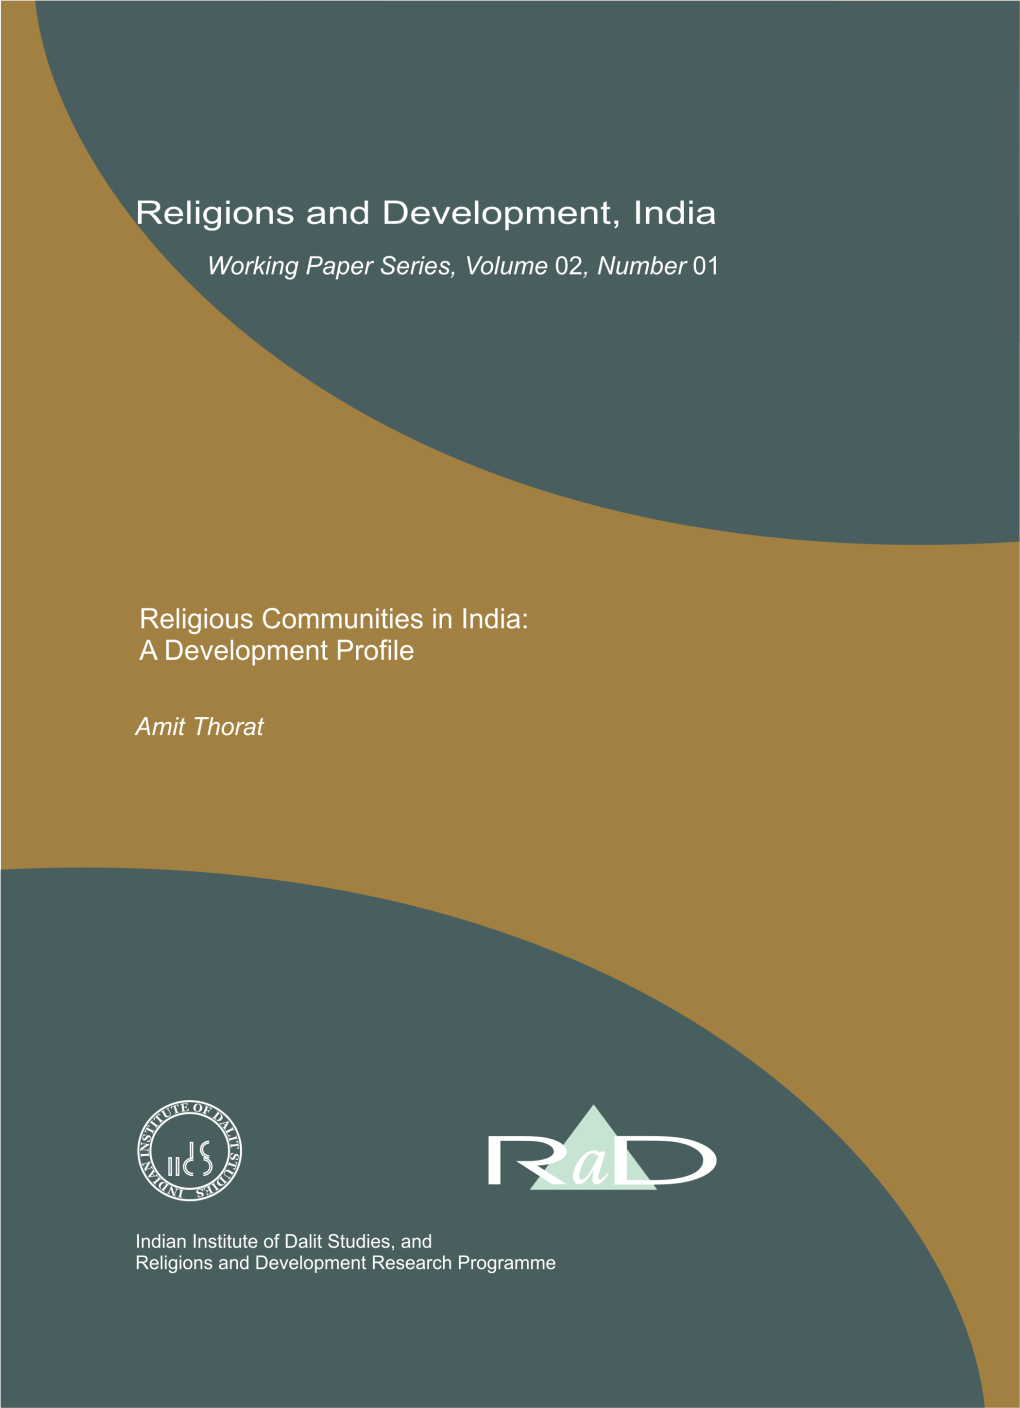 Religious Communities in India: a Development Profile